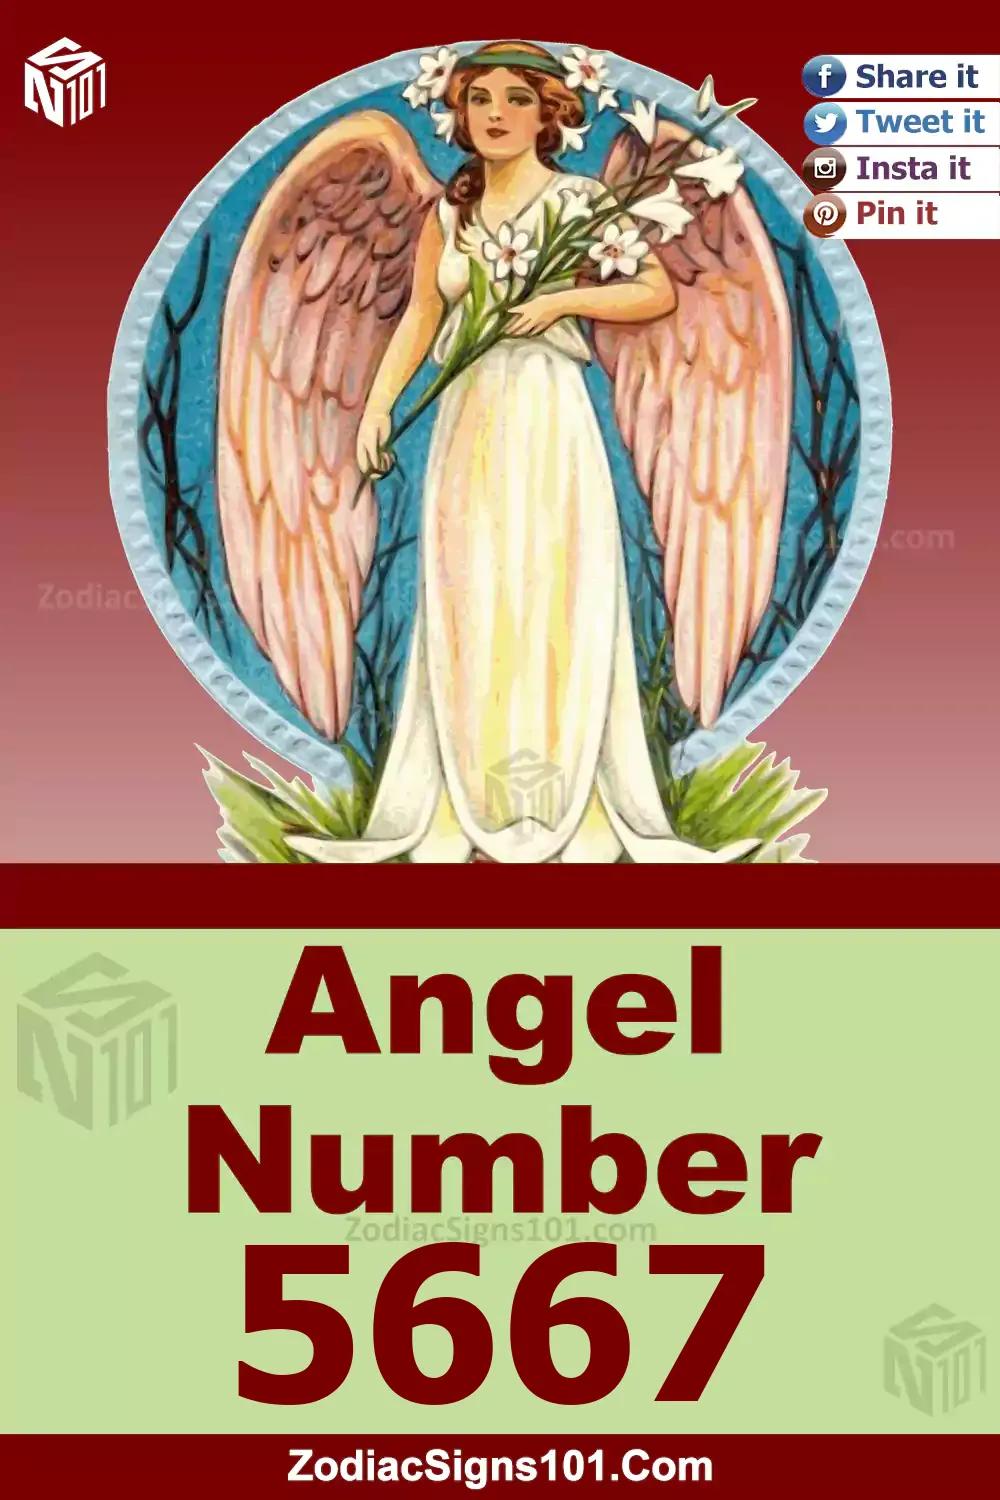 5667-Angel-Number-Meaning.jpg